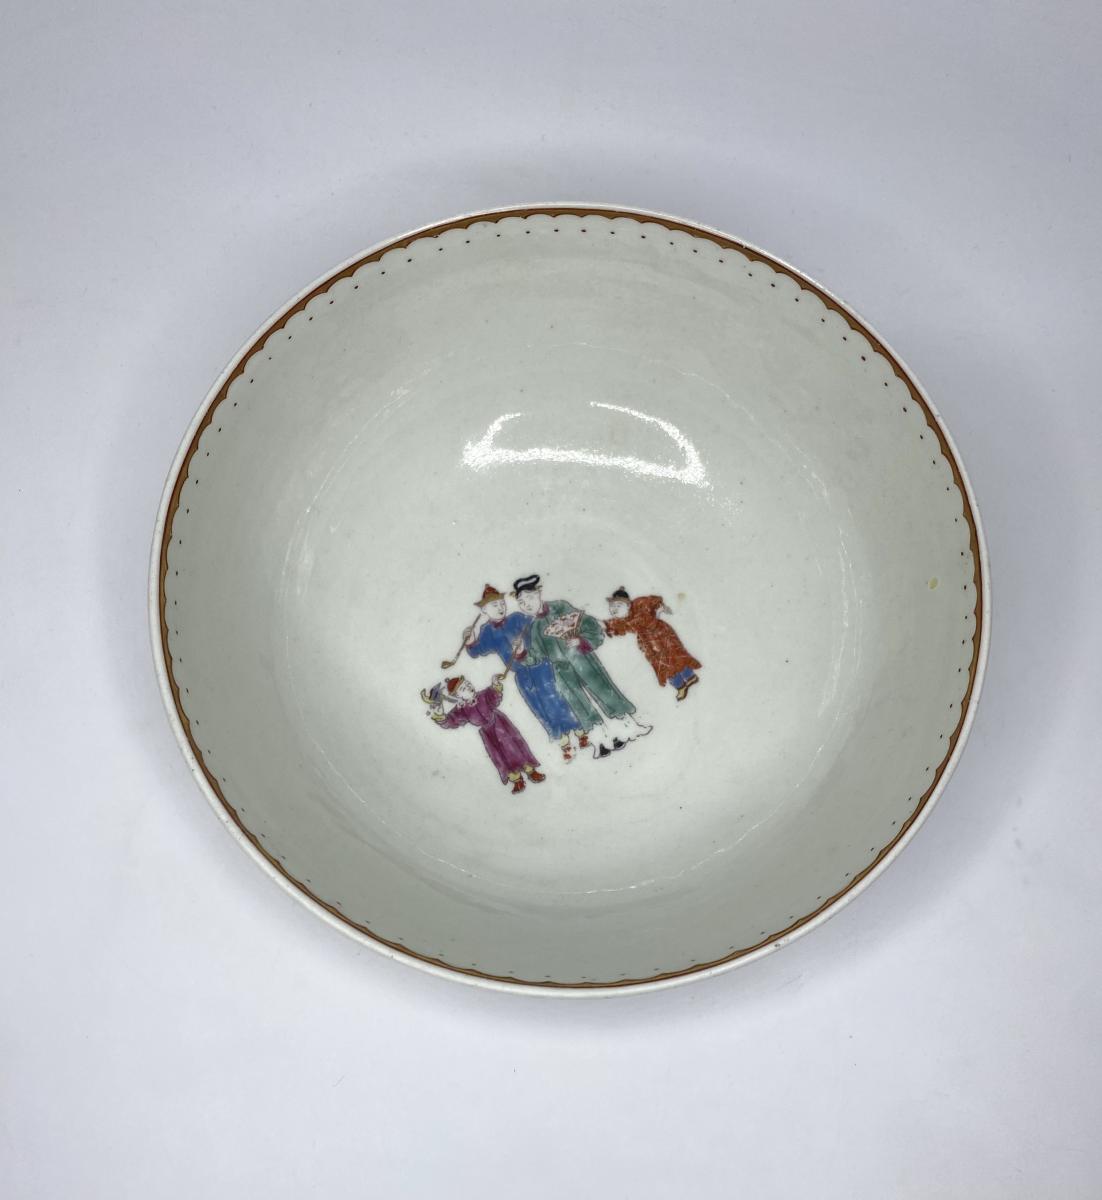 Worcester porcelain bowl ‘Monkey in a tree’ pattern